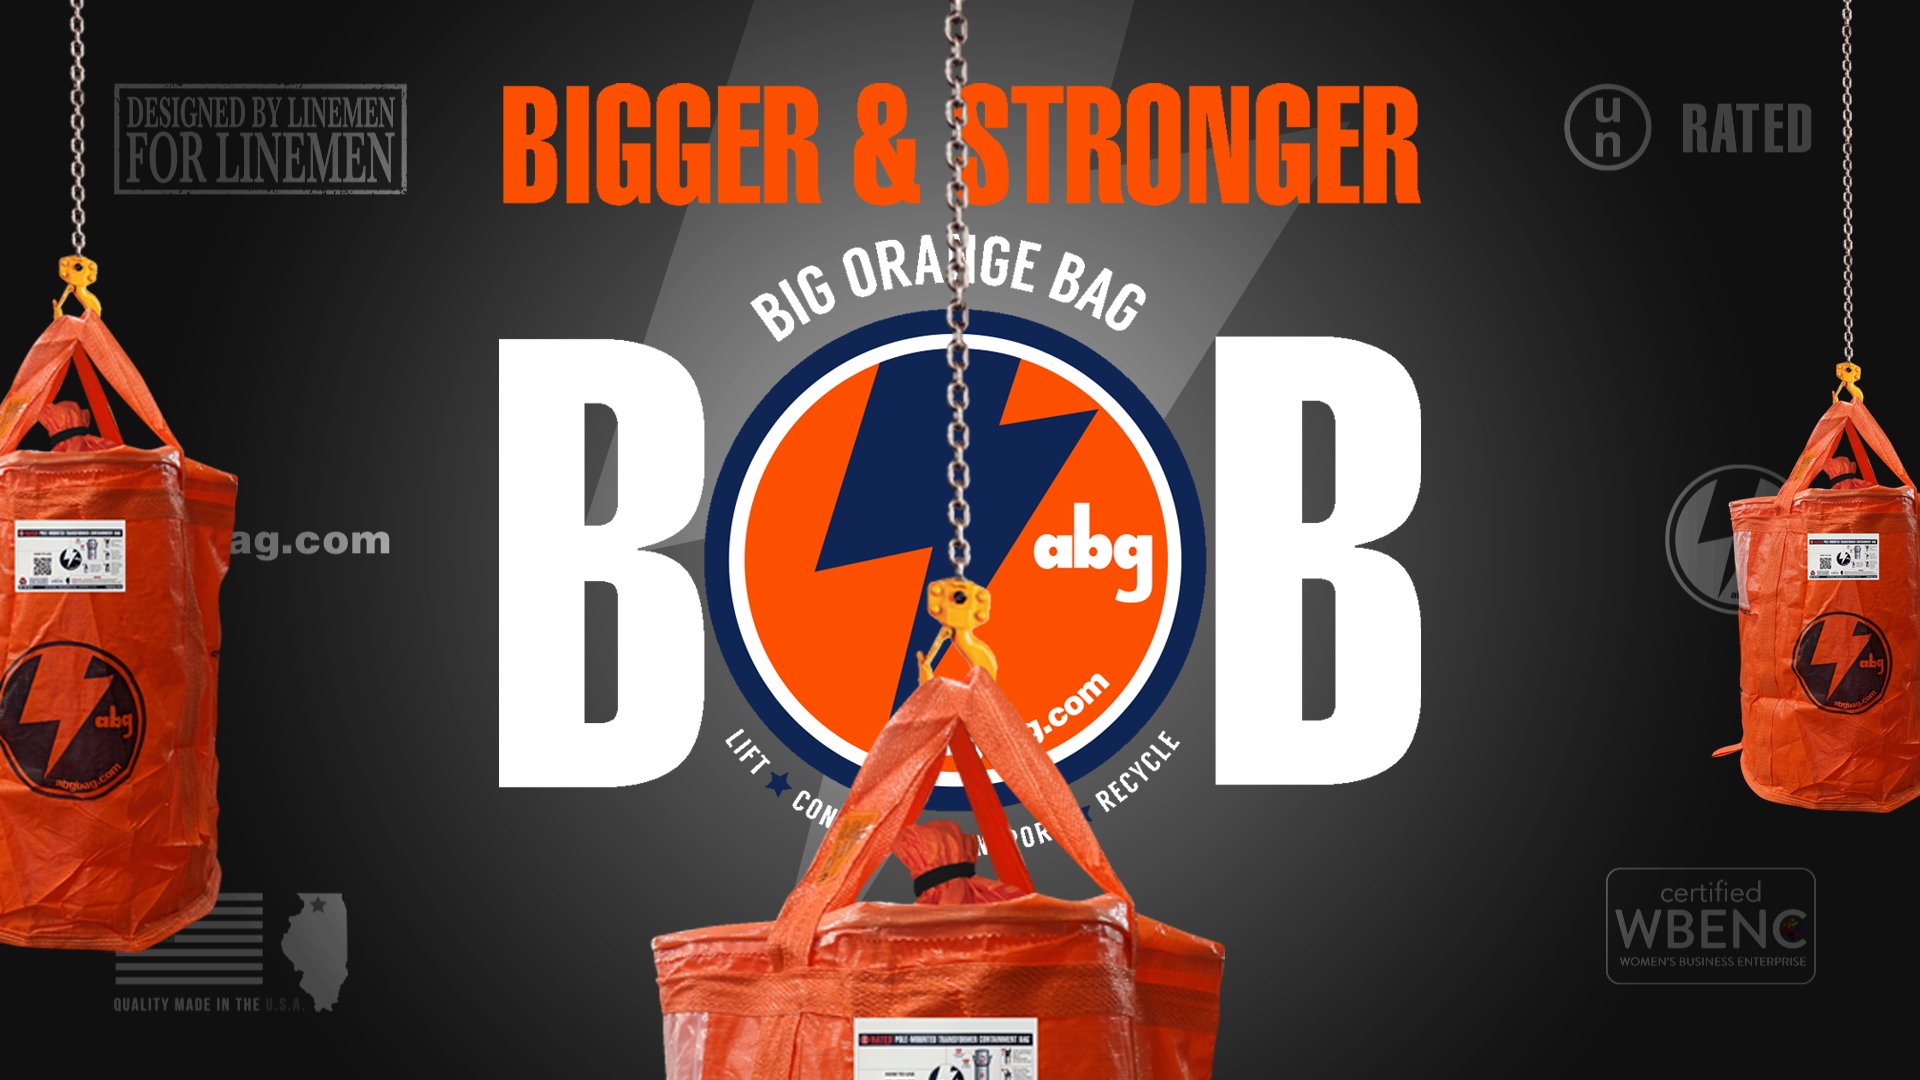 ABG Reveals Bigger & Stronger BOB® Transformer Containment Bags